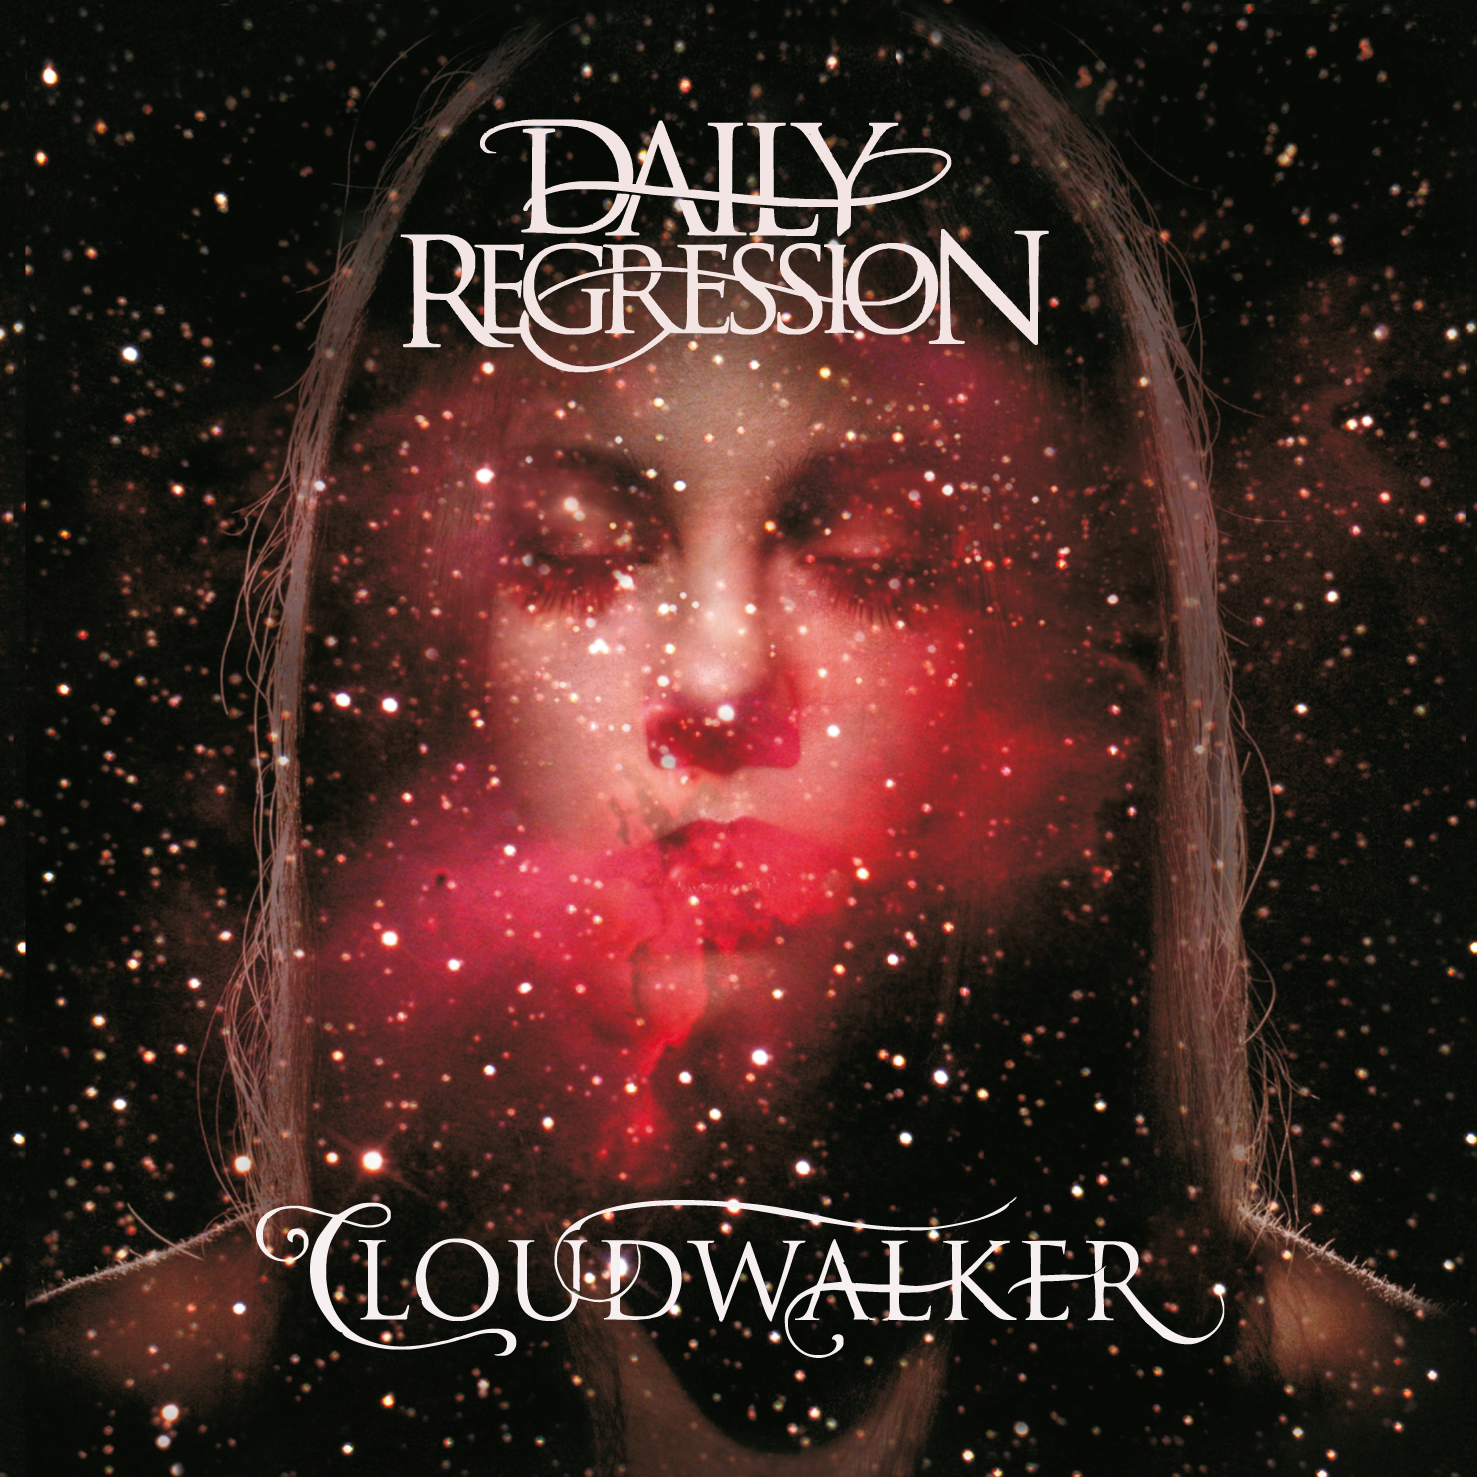 Daily Regression - Cloudwalker Artwork